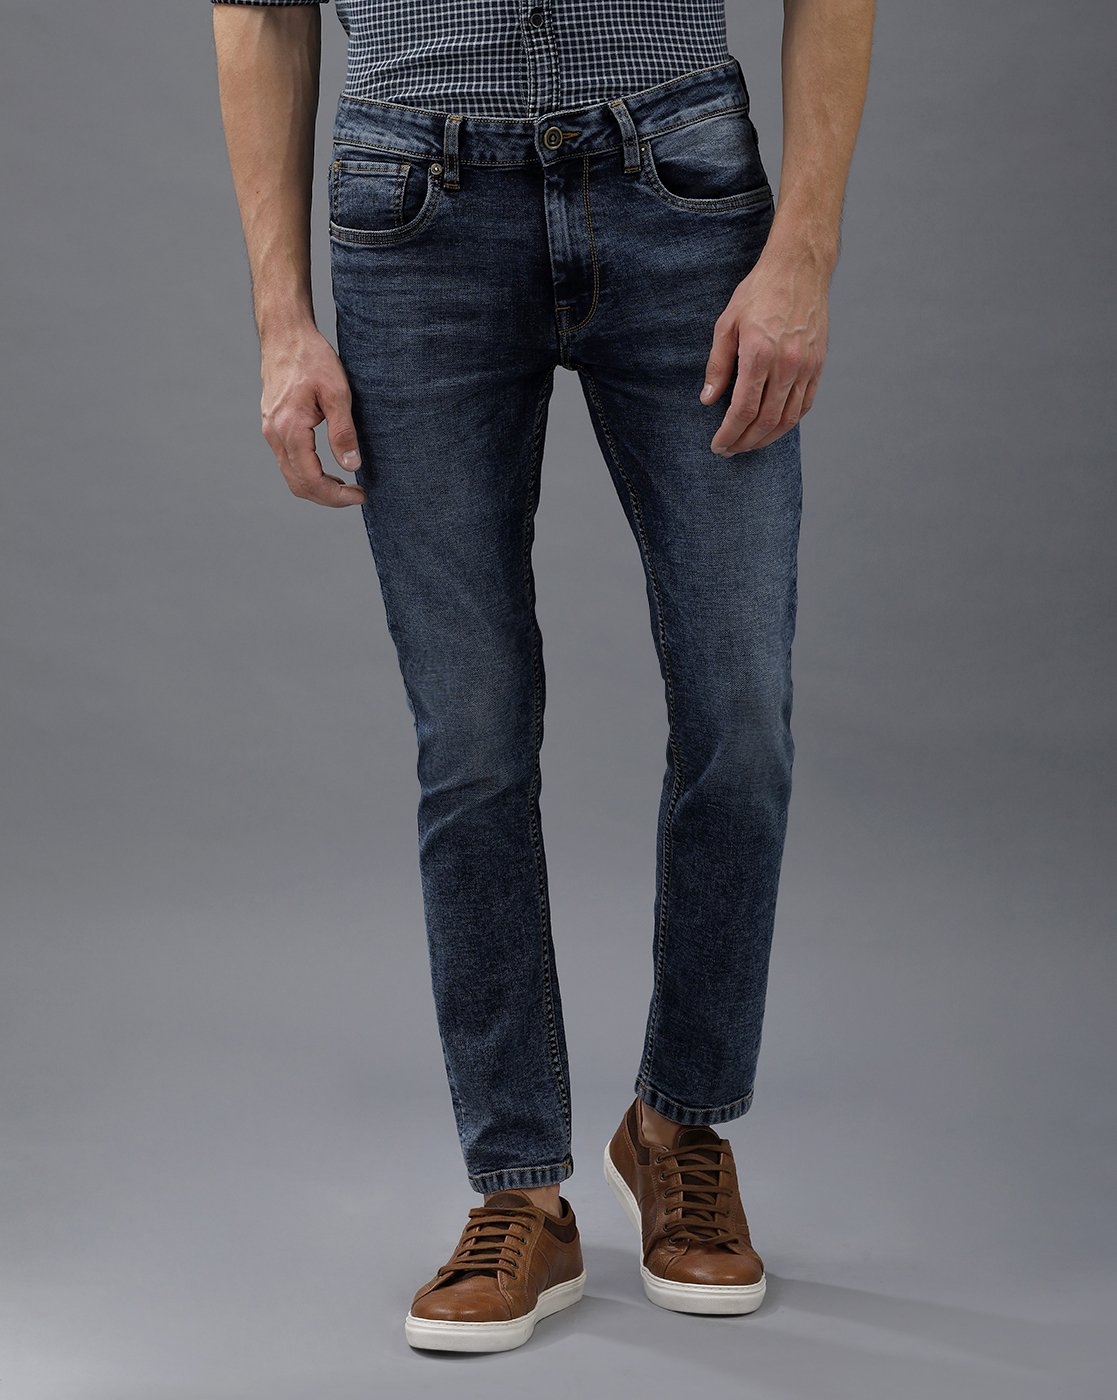 VOI JEANS | Men's Ice Blue Casual Clean Look Jeans ( VOJN1523 )